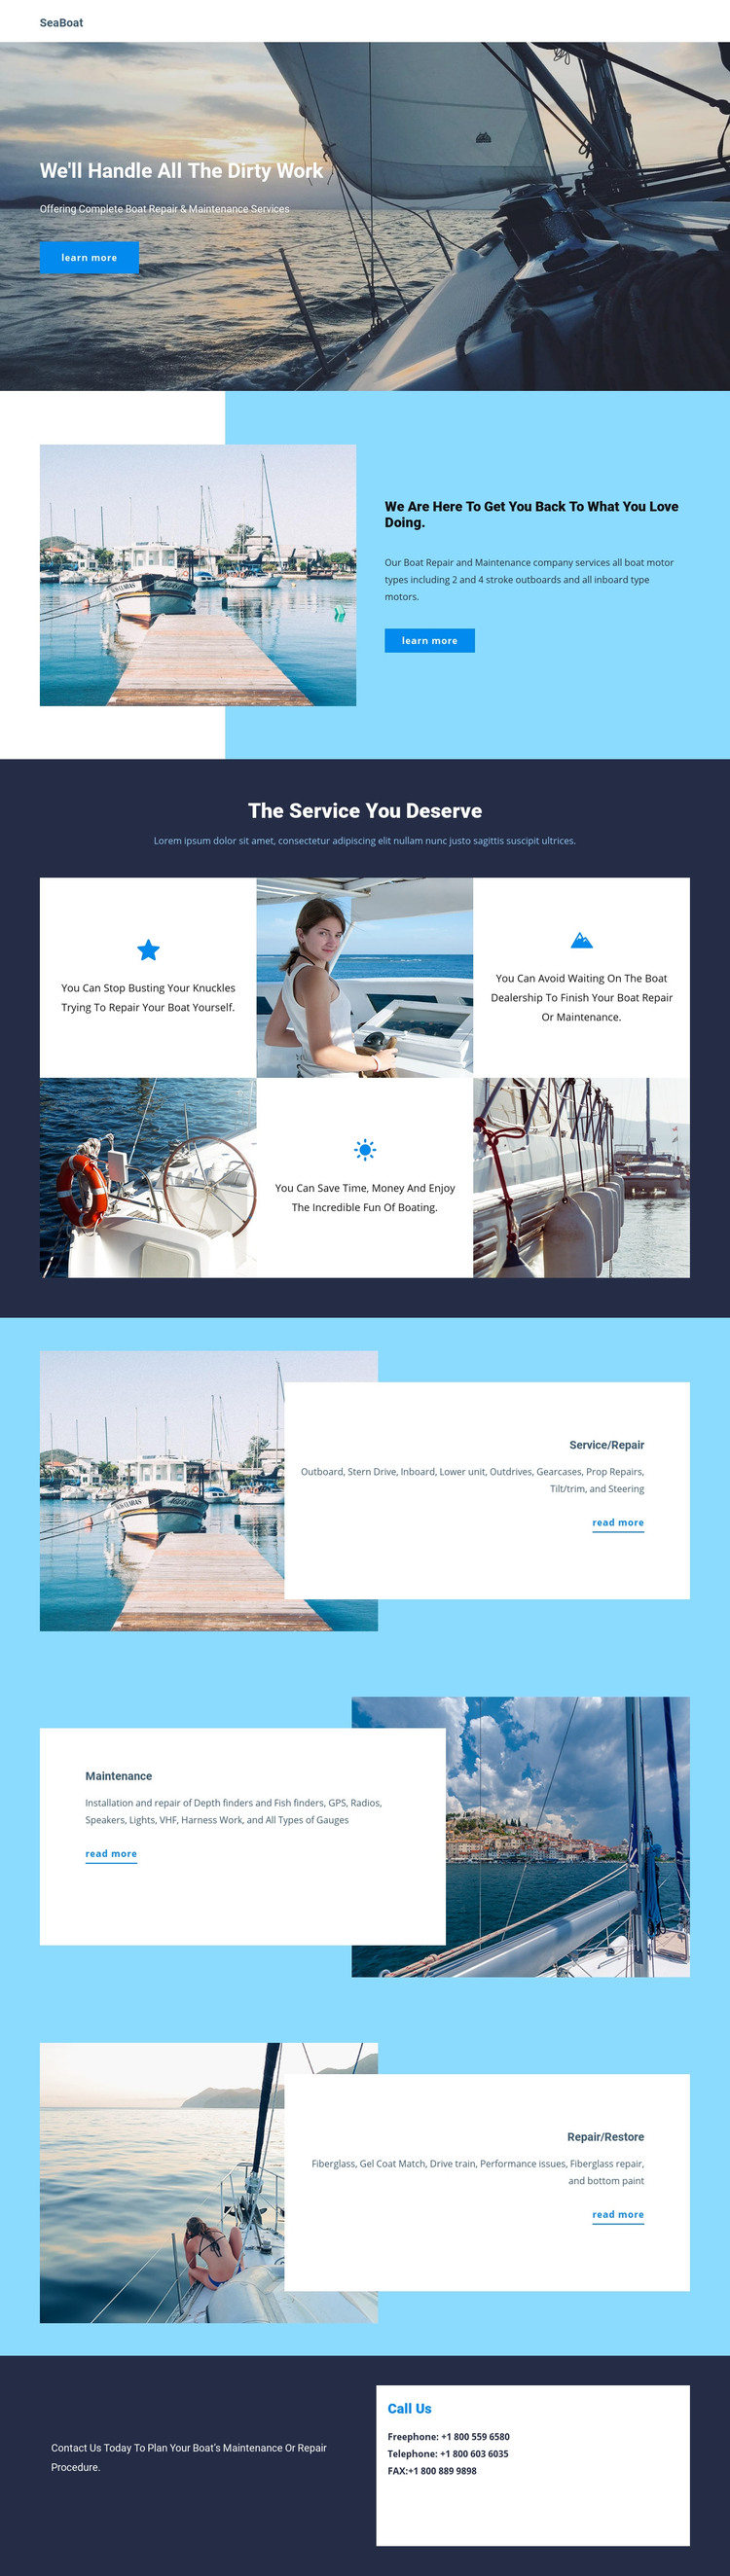 Travel on Seaboat Homepage Design